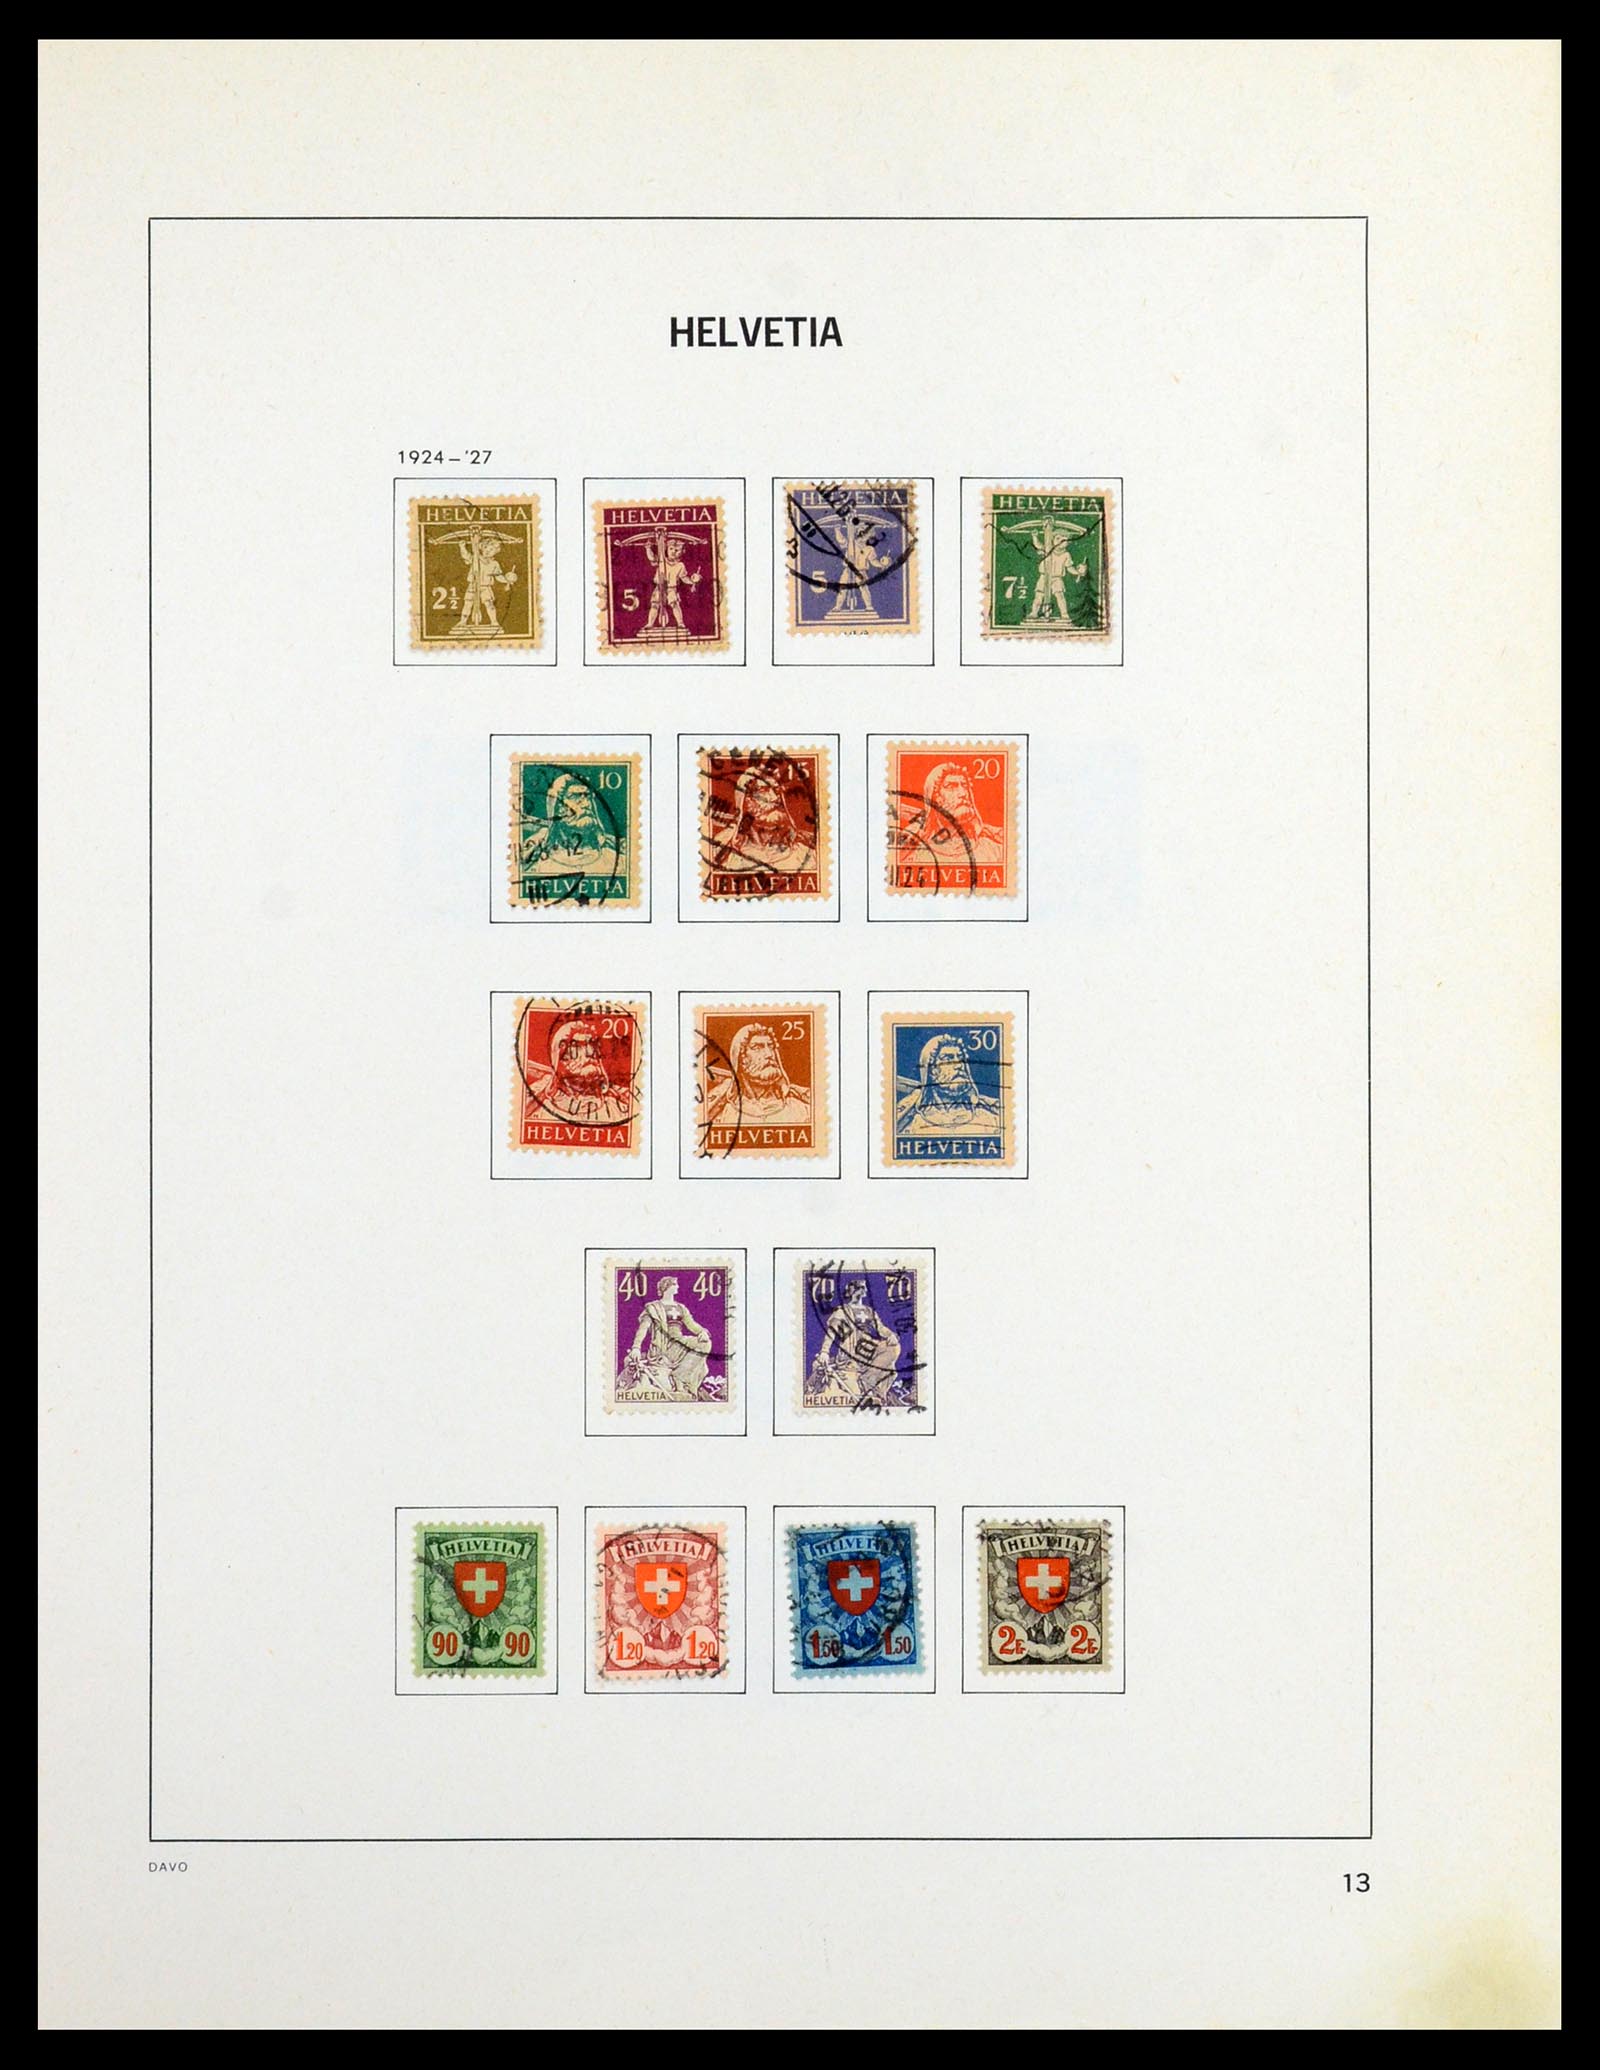 36424 011 - Stamp collection 36424 Switzerland 1854-1997.